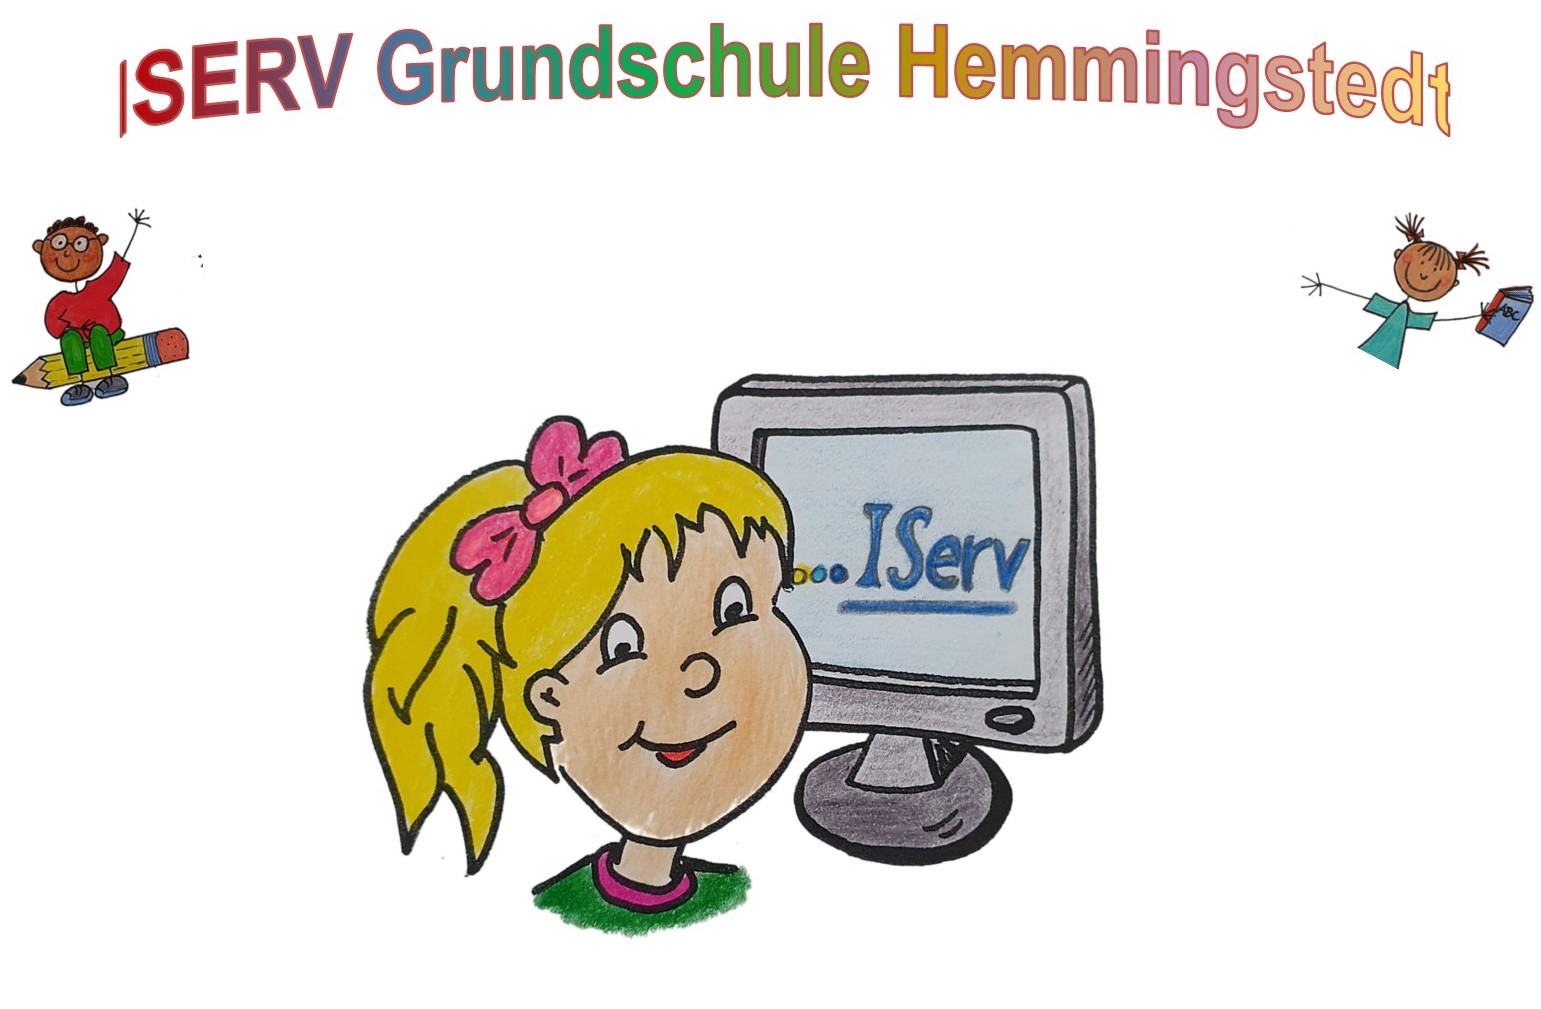 Grundschule Hemmingstedt